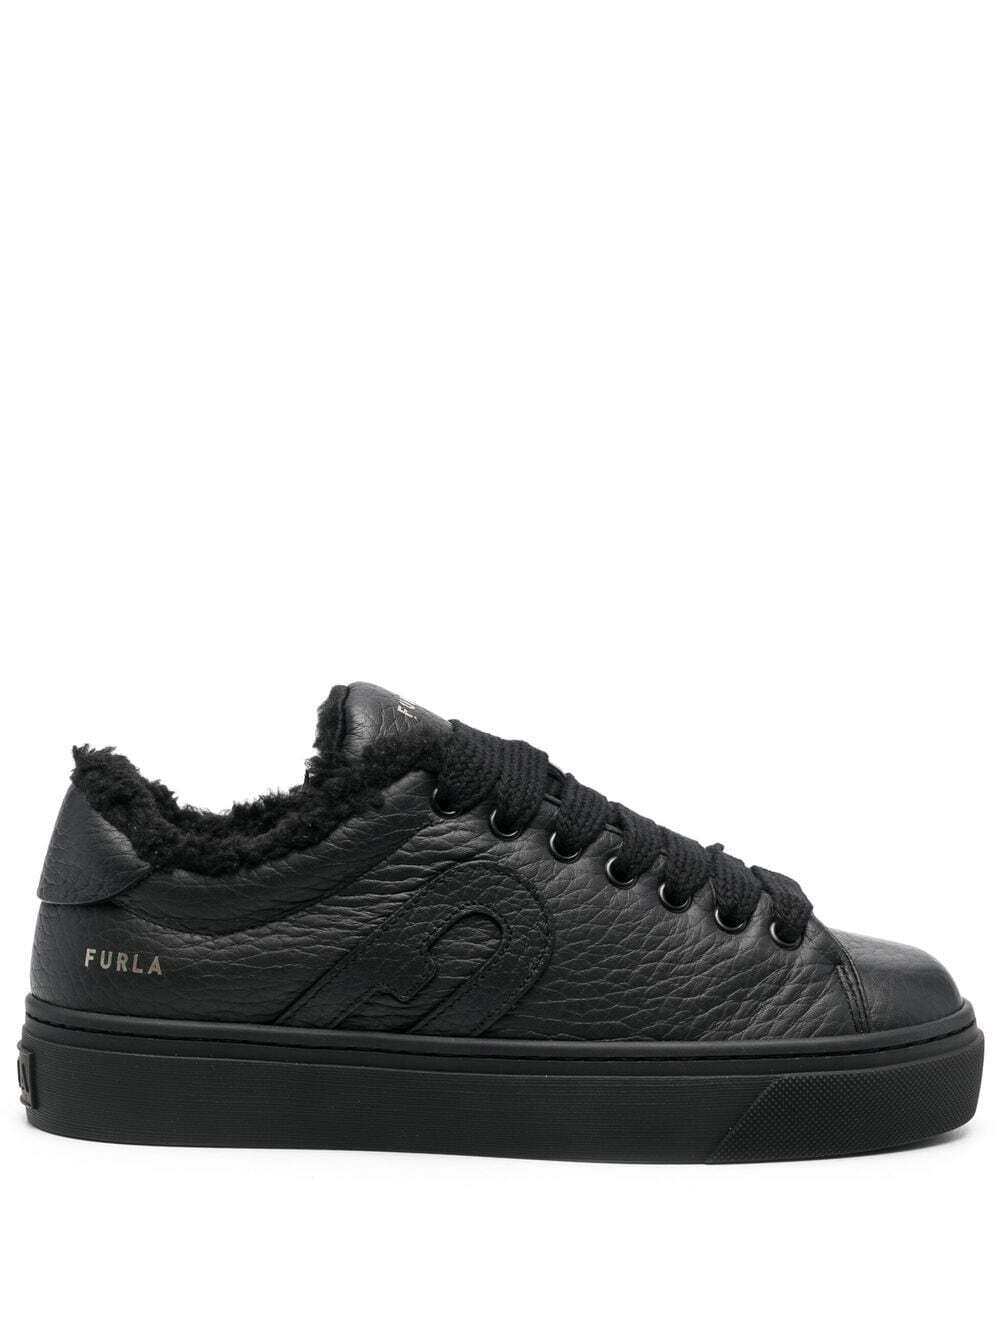 Furla shearling-lined low-top sneakers - Black